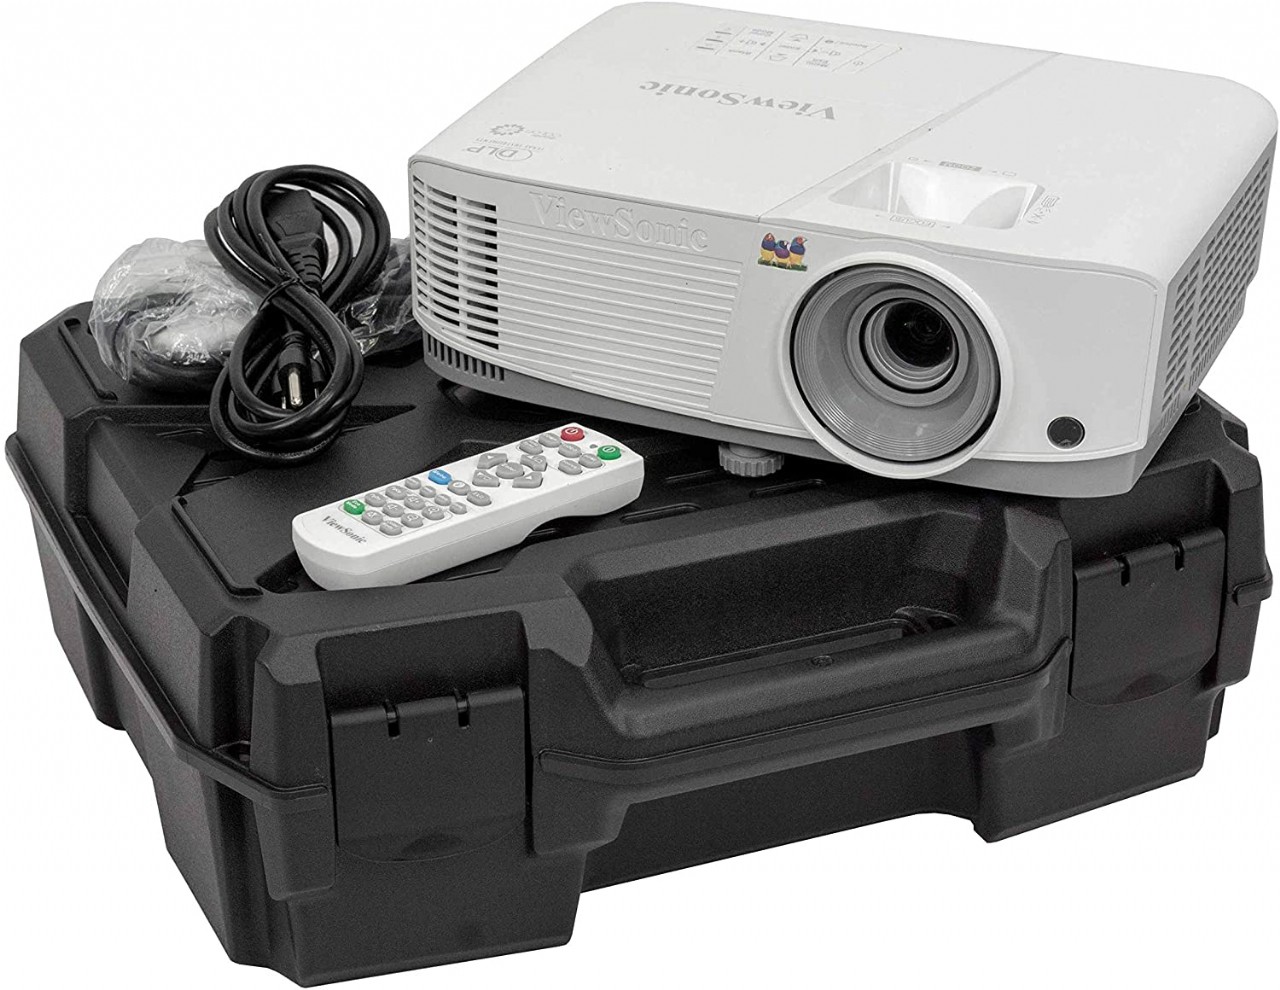 Case Club Projector Case Compatible with Epson VS250, VS350, VS355 Projectors Plus Cords and Remote